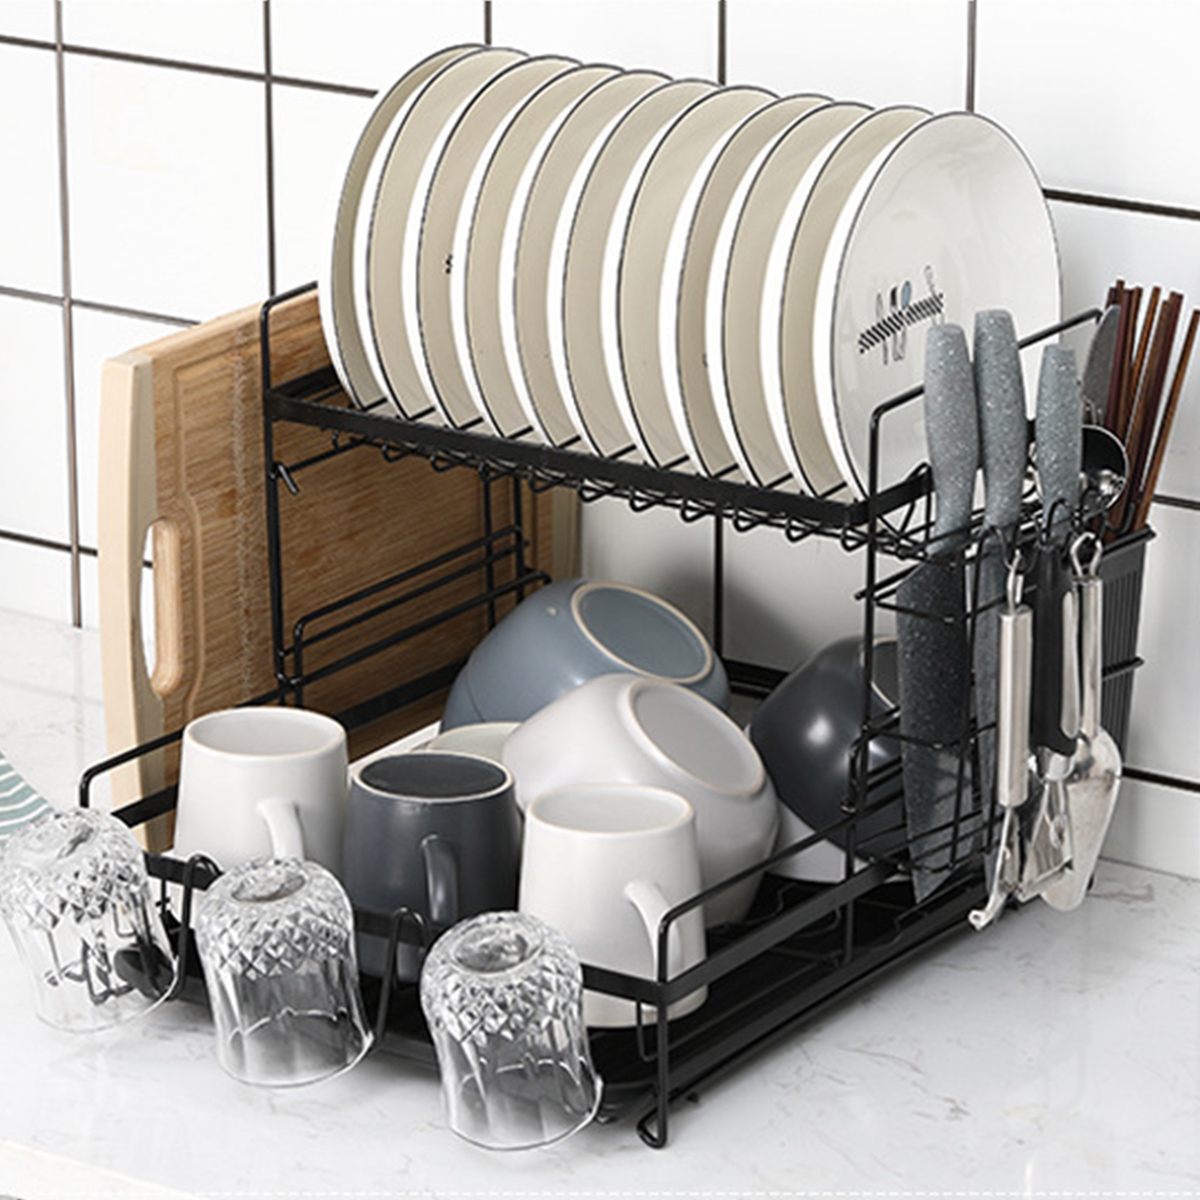 2-Tier-Multifunctional-Kitchen-Drying-Dish-Rack-over-Sink-Drainer-Shelf-1748091-10